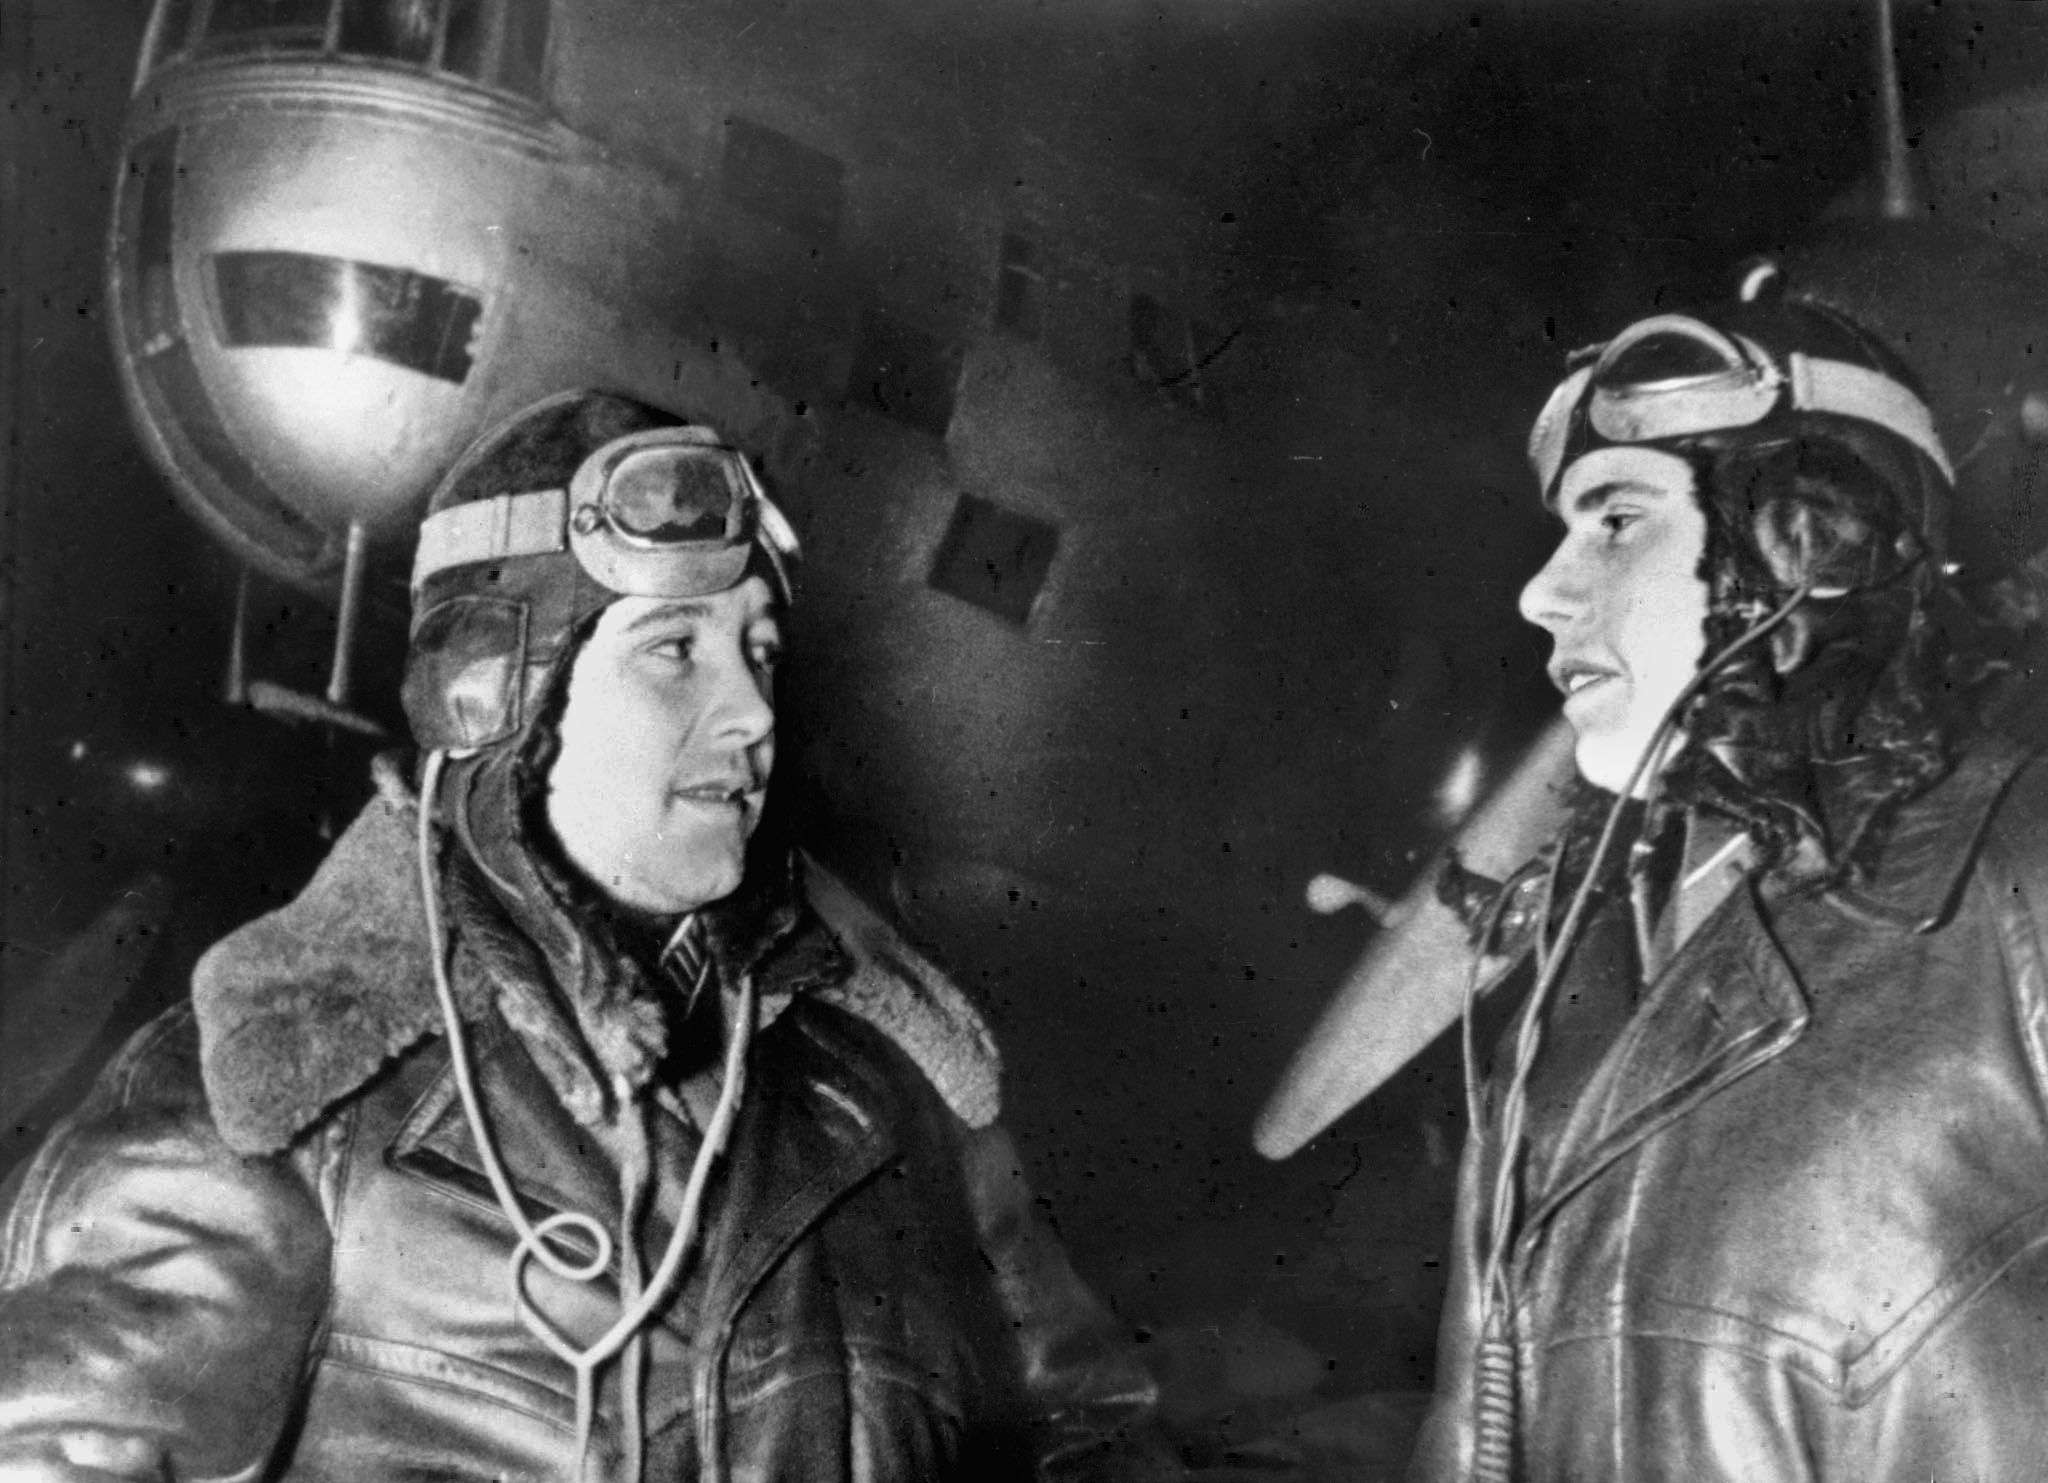 Colonel Evgeniy N. Preobrazhenskiy, who led the 1st Torpedo Bomber Regiment, talks with navigator Pyotr Khokhlov, who flew on Operation B’s daring first mission against Berlin on August 7-8, 1941.